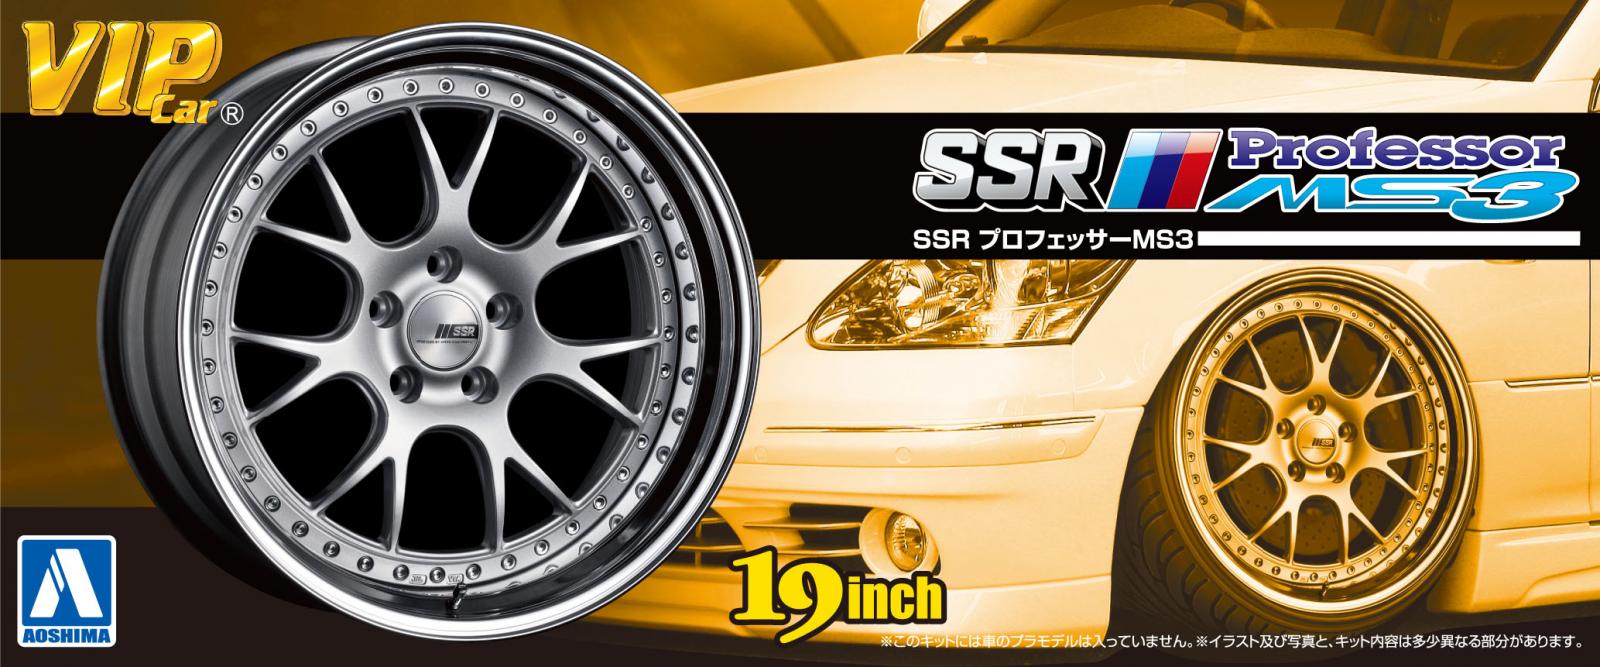 1 24 shop. Aoshima 1/24 SSR Professor vf1 20 inch. Aoshima диски. Колеса для сборной модели 1 24. Диски 1/24 для сборных моделей.